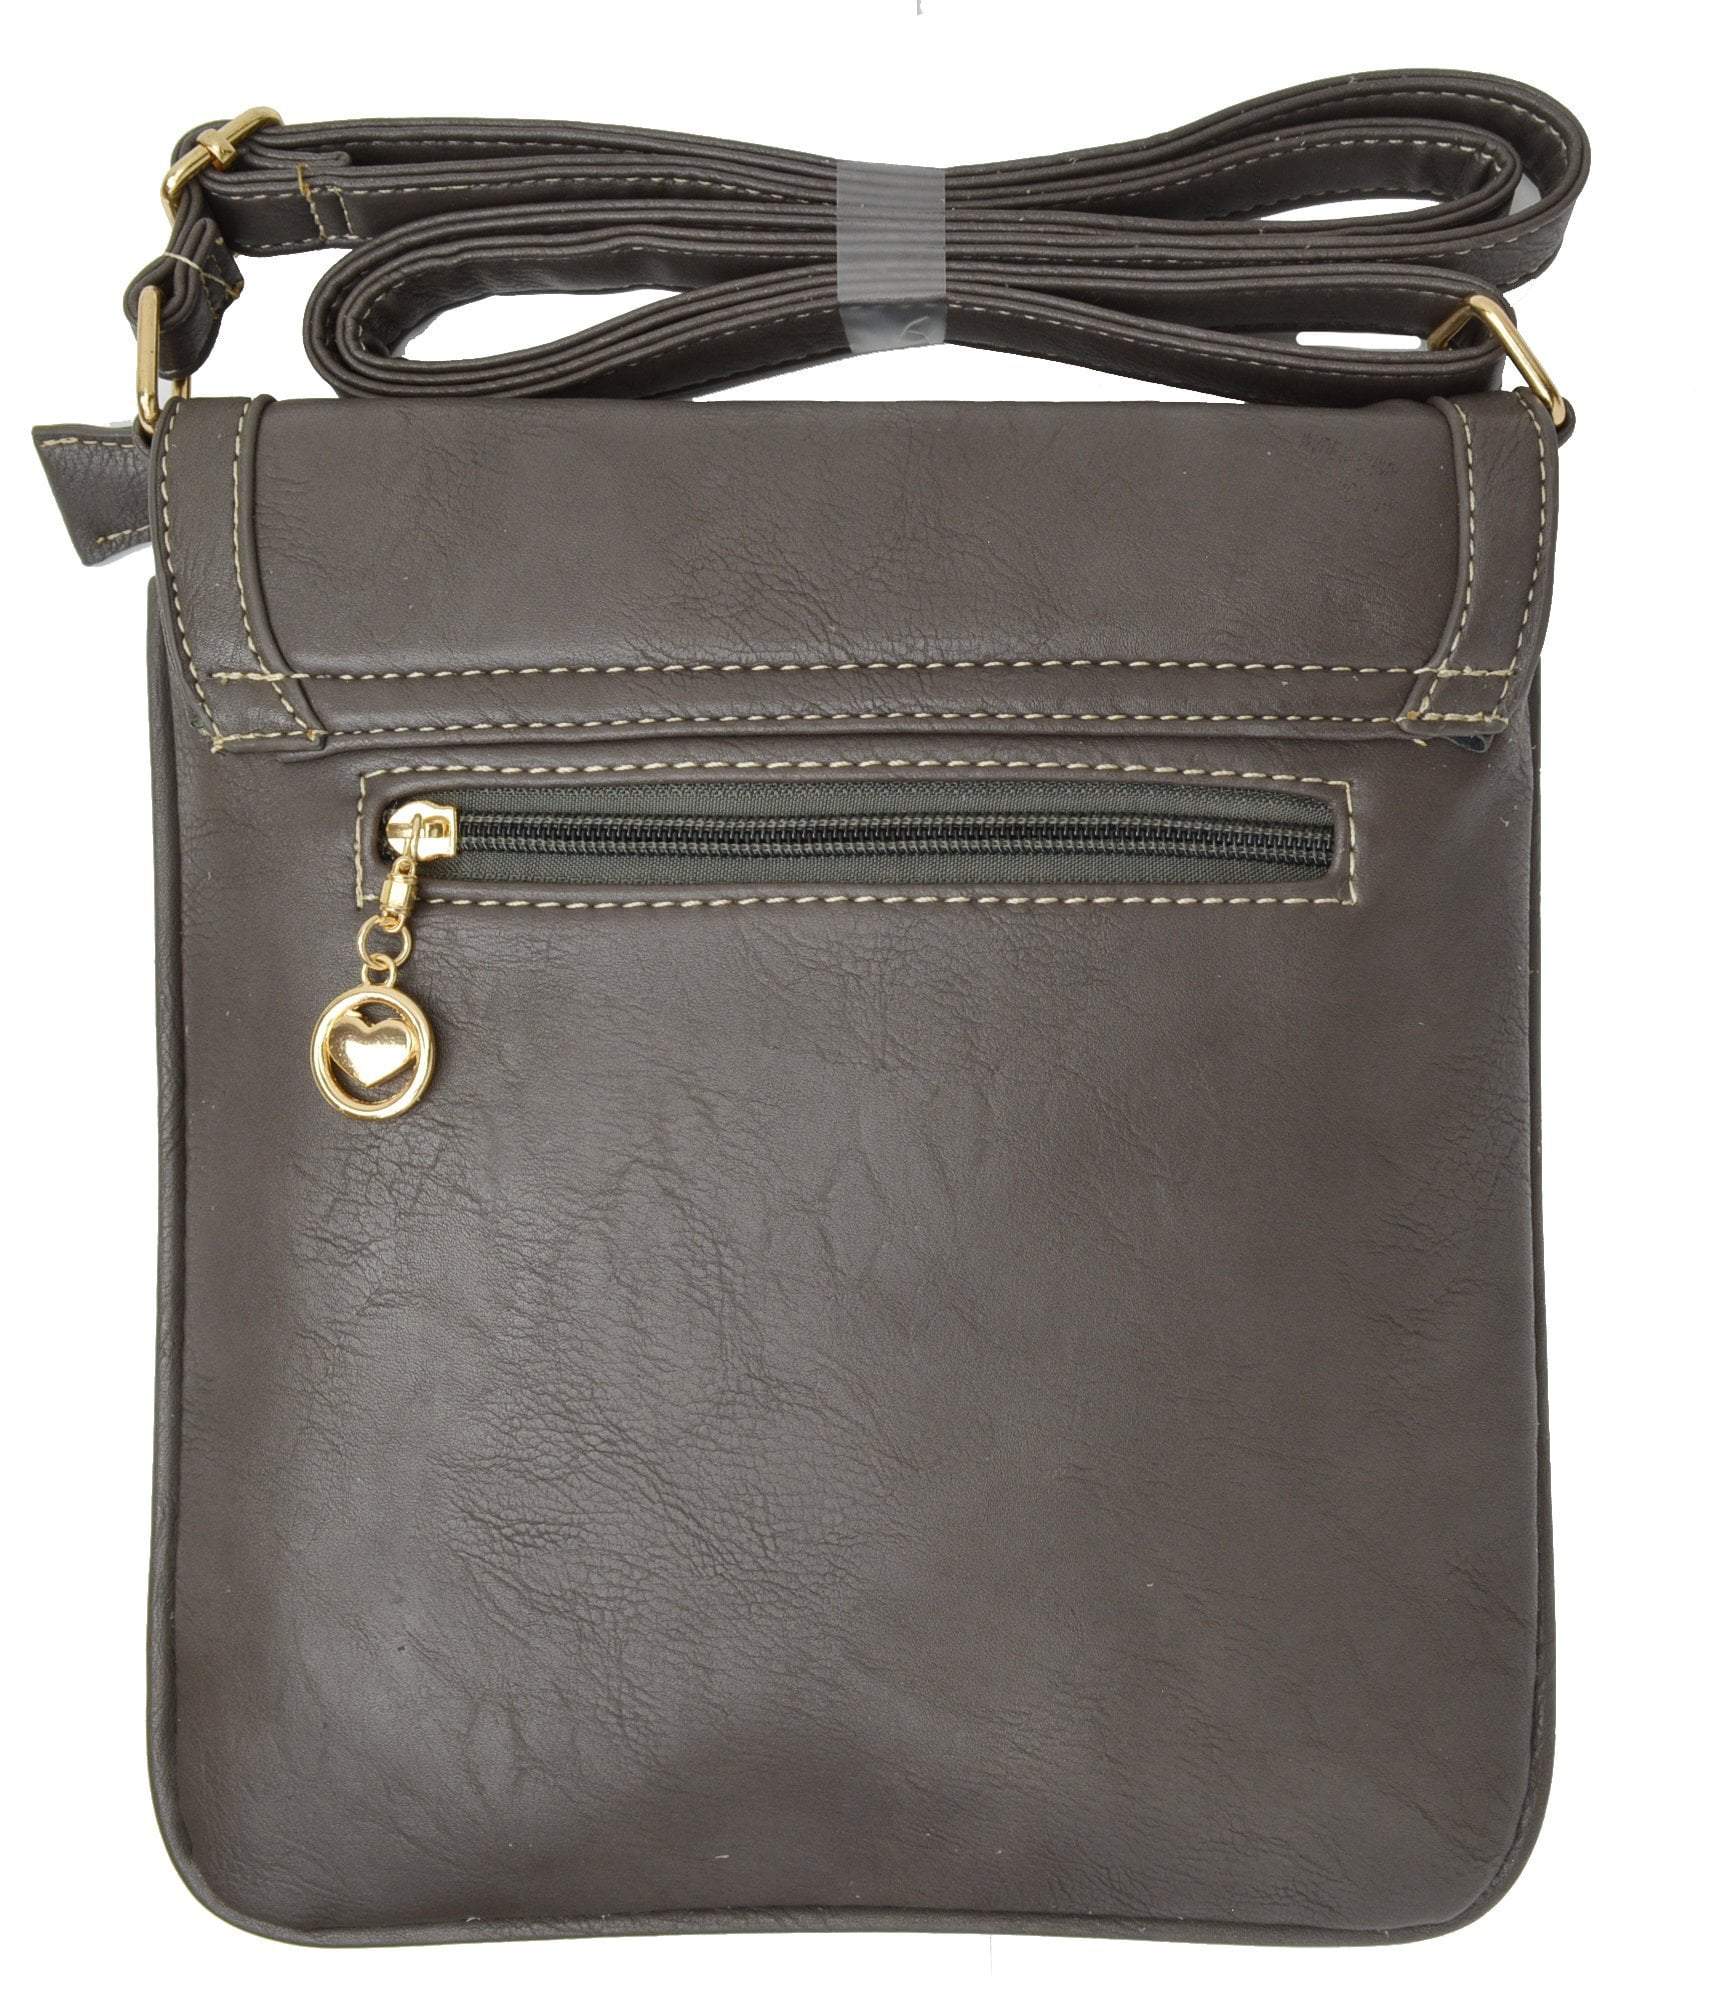 Swiss Marshall Women's Designer Purse Shoulder Bag Soft Leather Crossbody  Handbag for Ladies (Black): Handbags